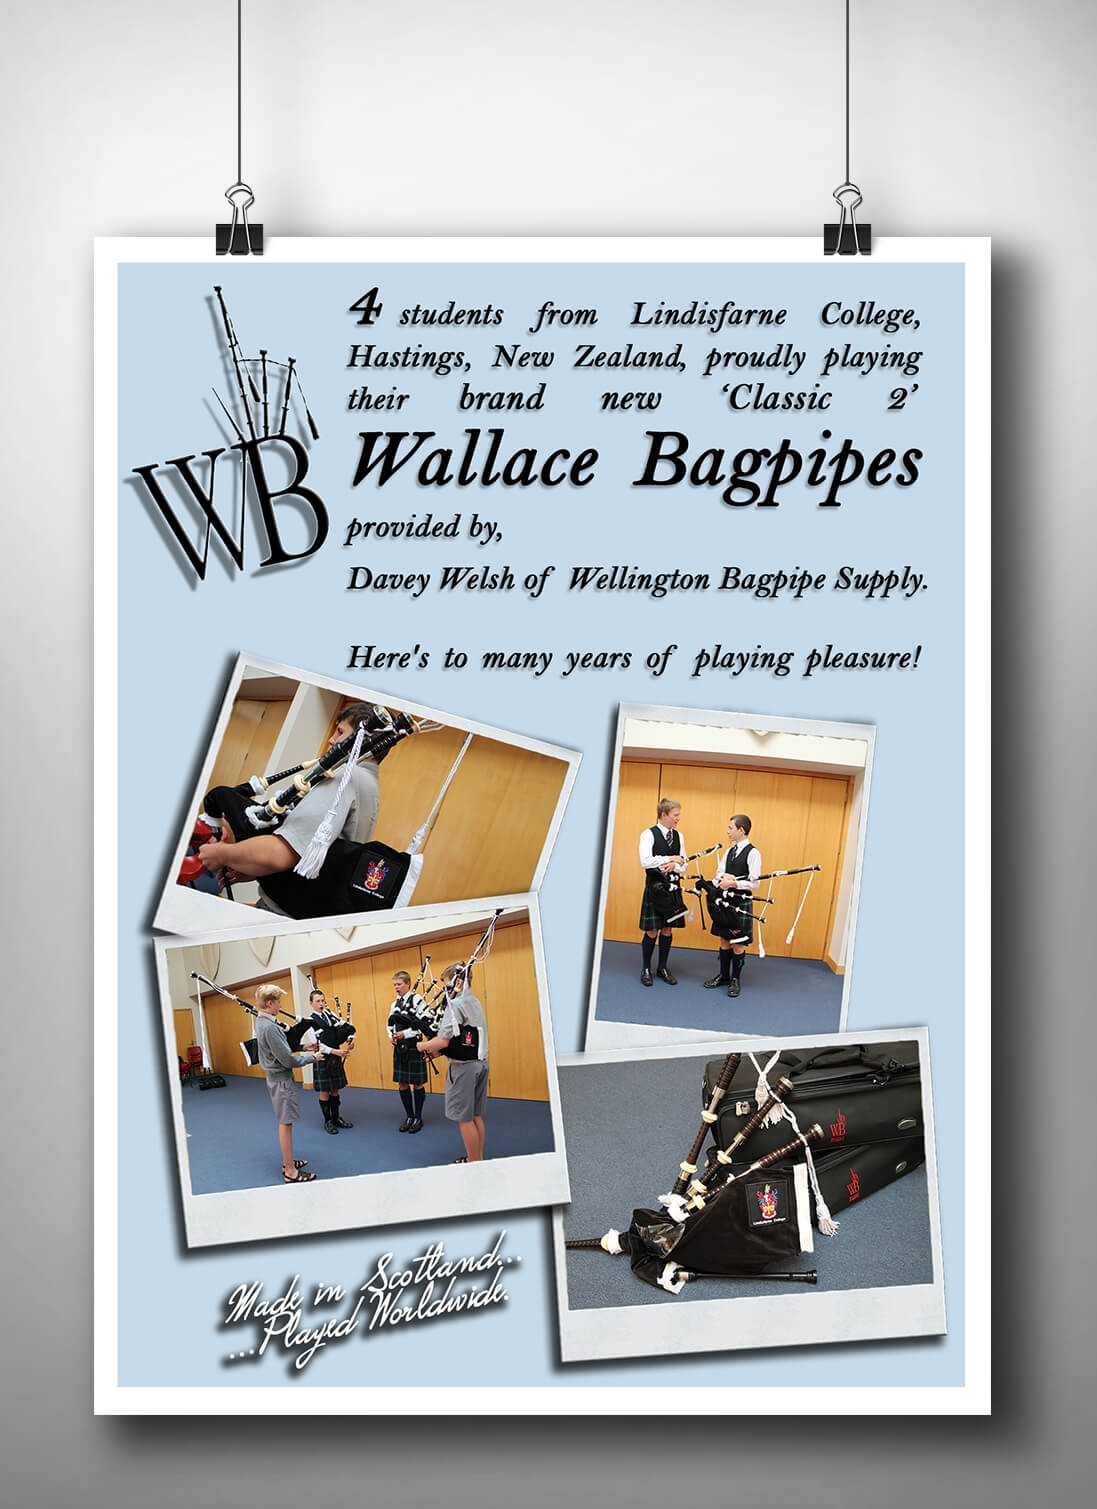 Wellington Bagpipe Supply